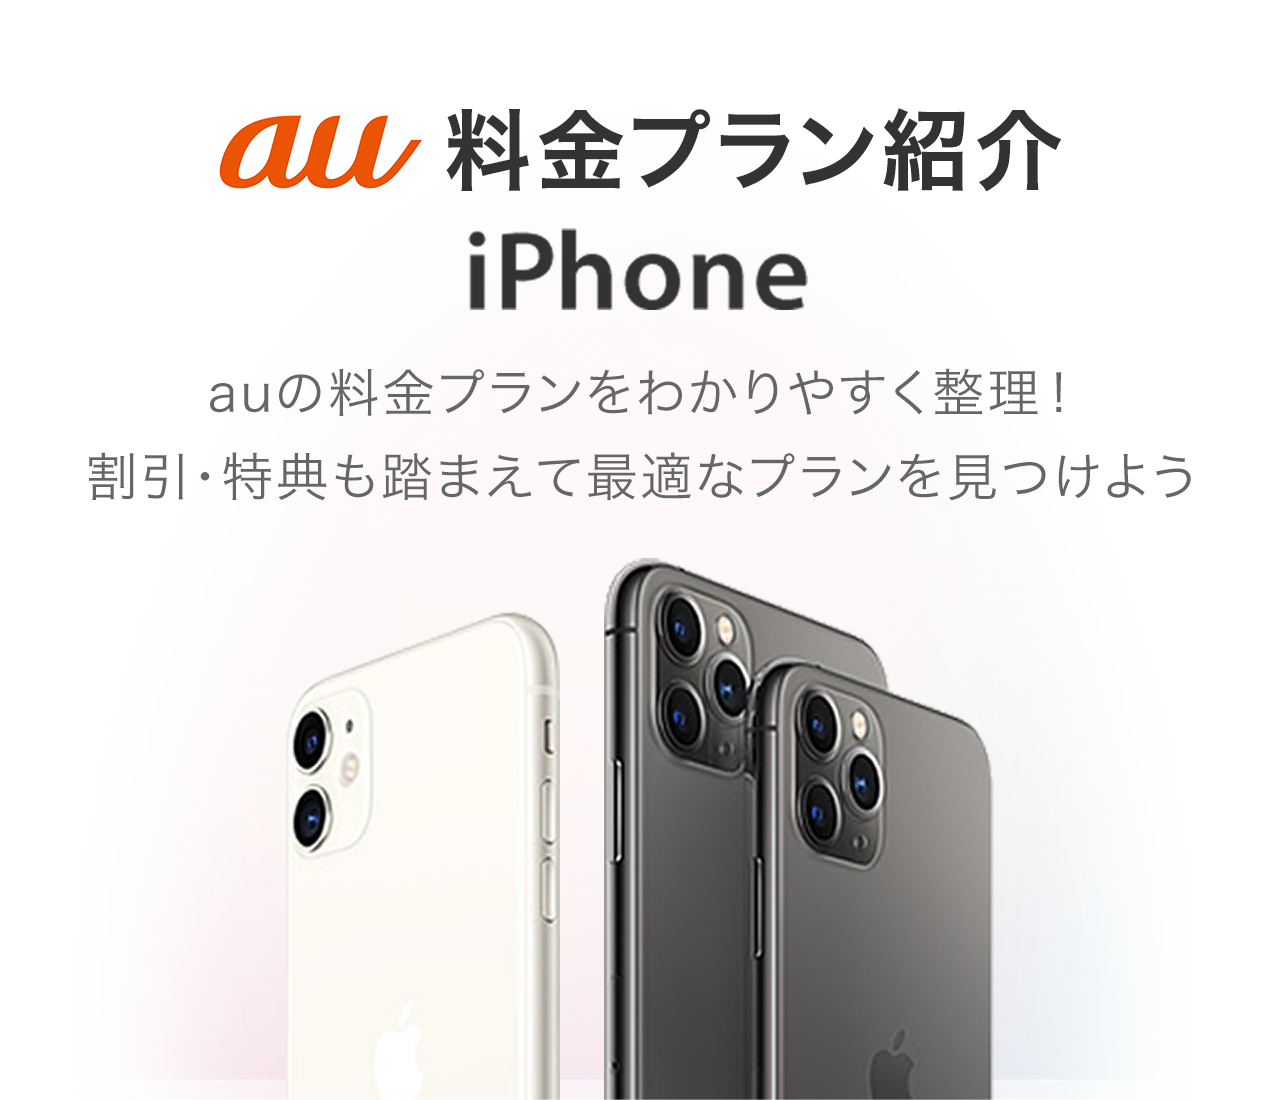 Auの料金プラン Iphone 価格 Com